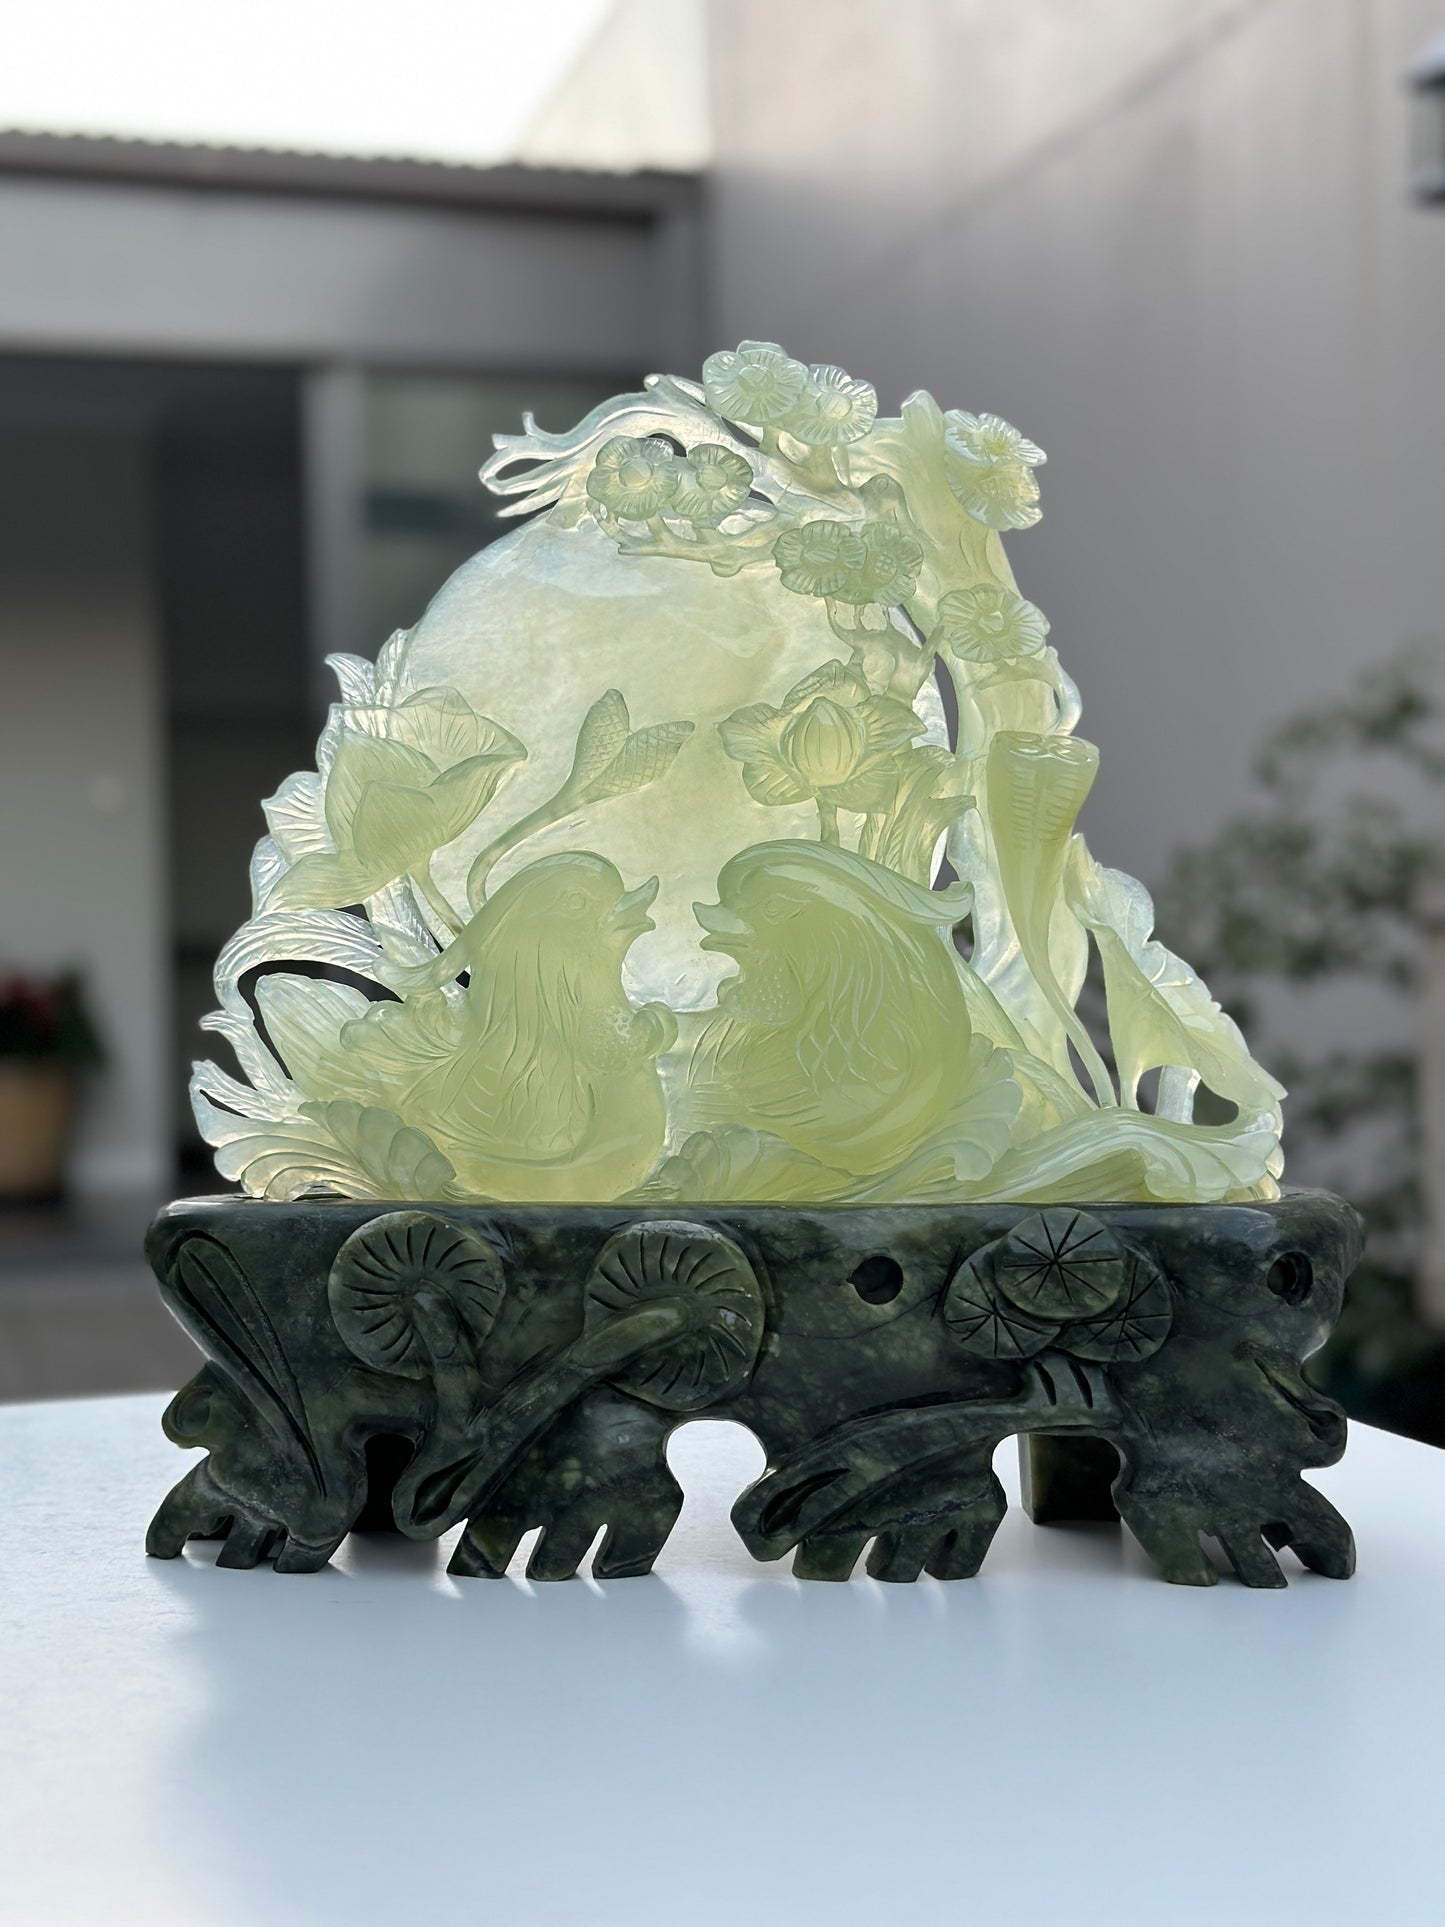 Eternal Love: Jade Sculpture of the Traditional Chinese Biyi Bird